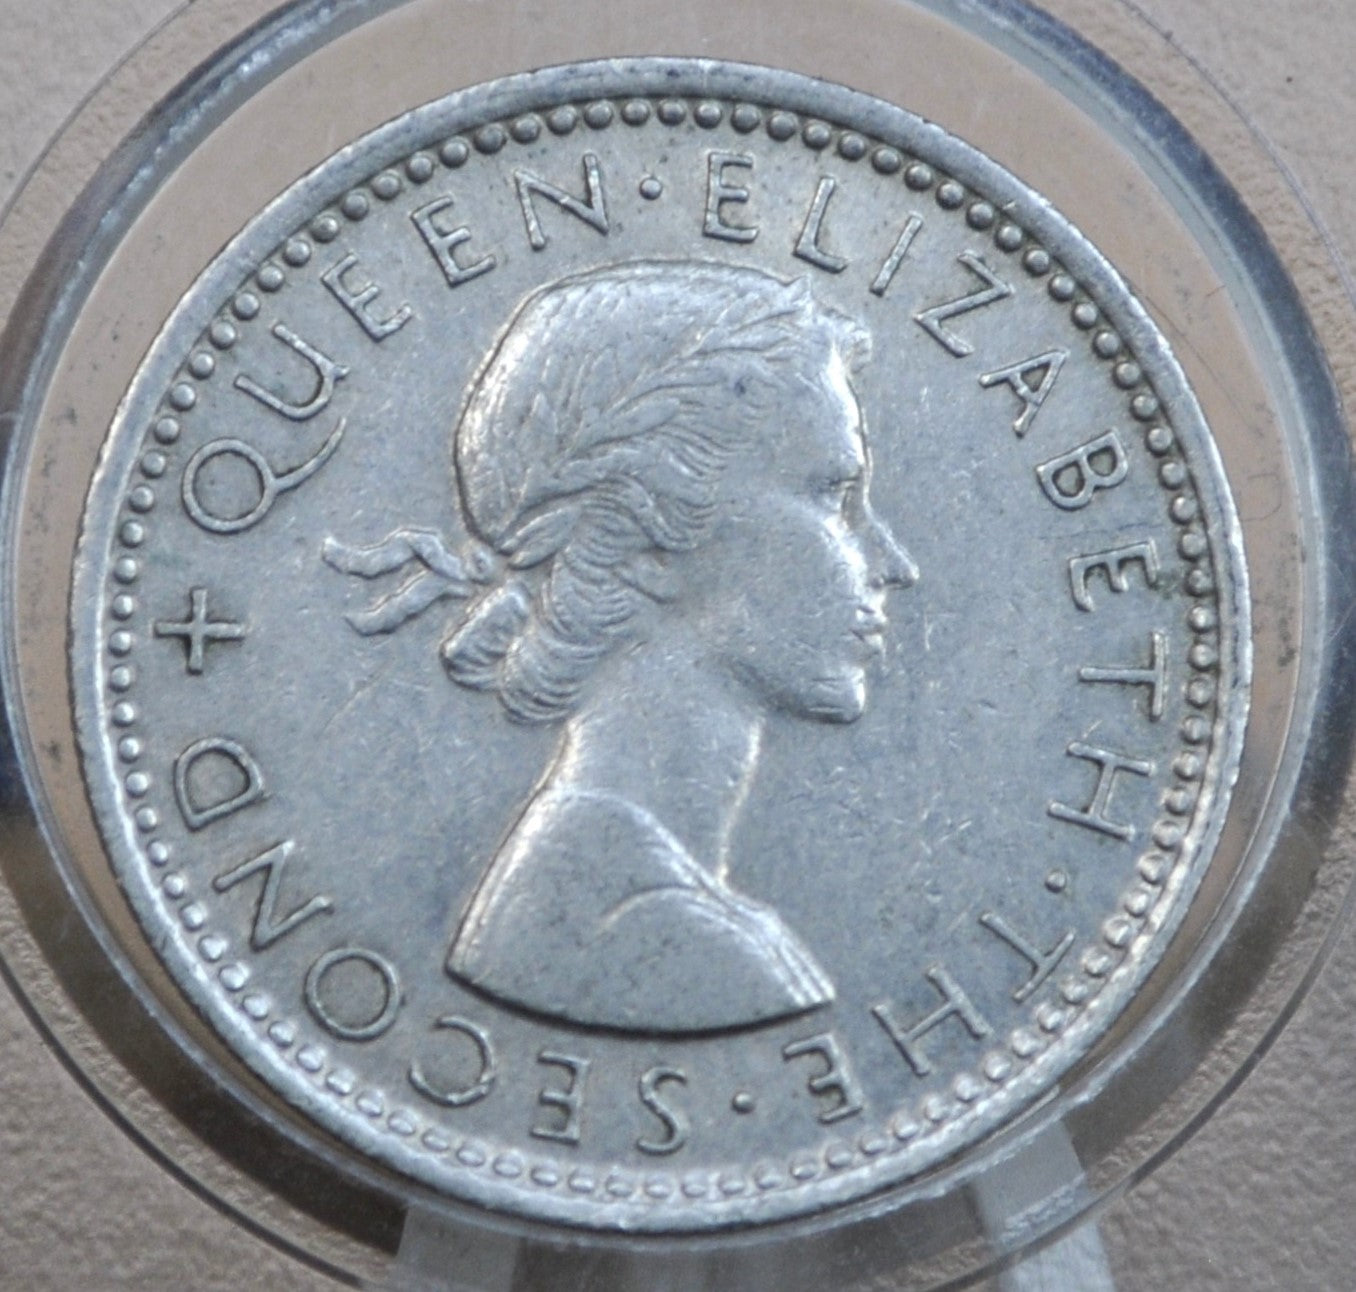 1965 New Zealand Sixpence - Great Condition, AU - 1965 New Zealand Six pence 6 Pence